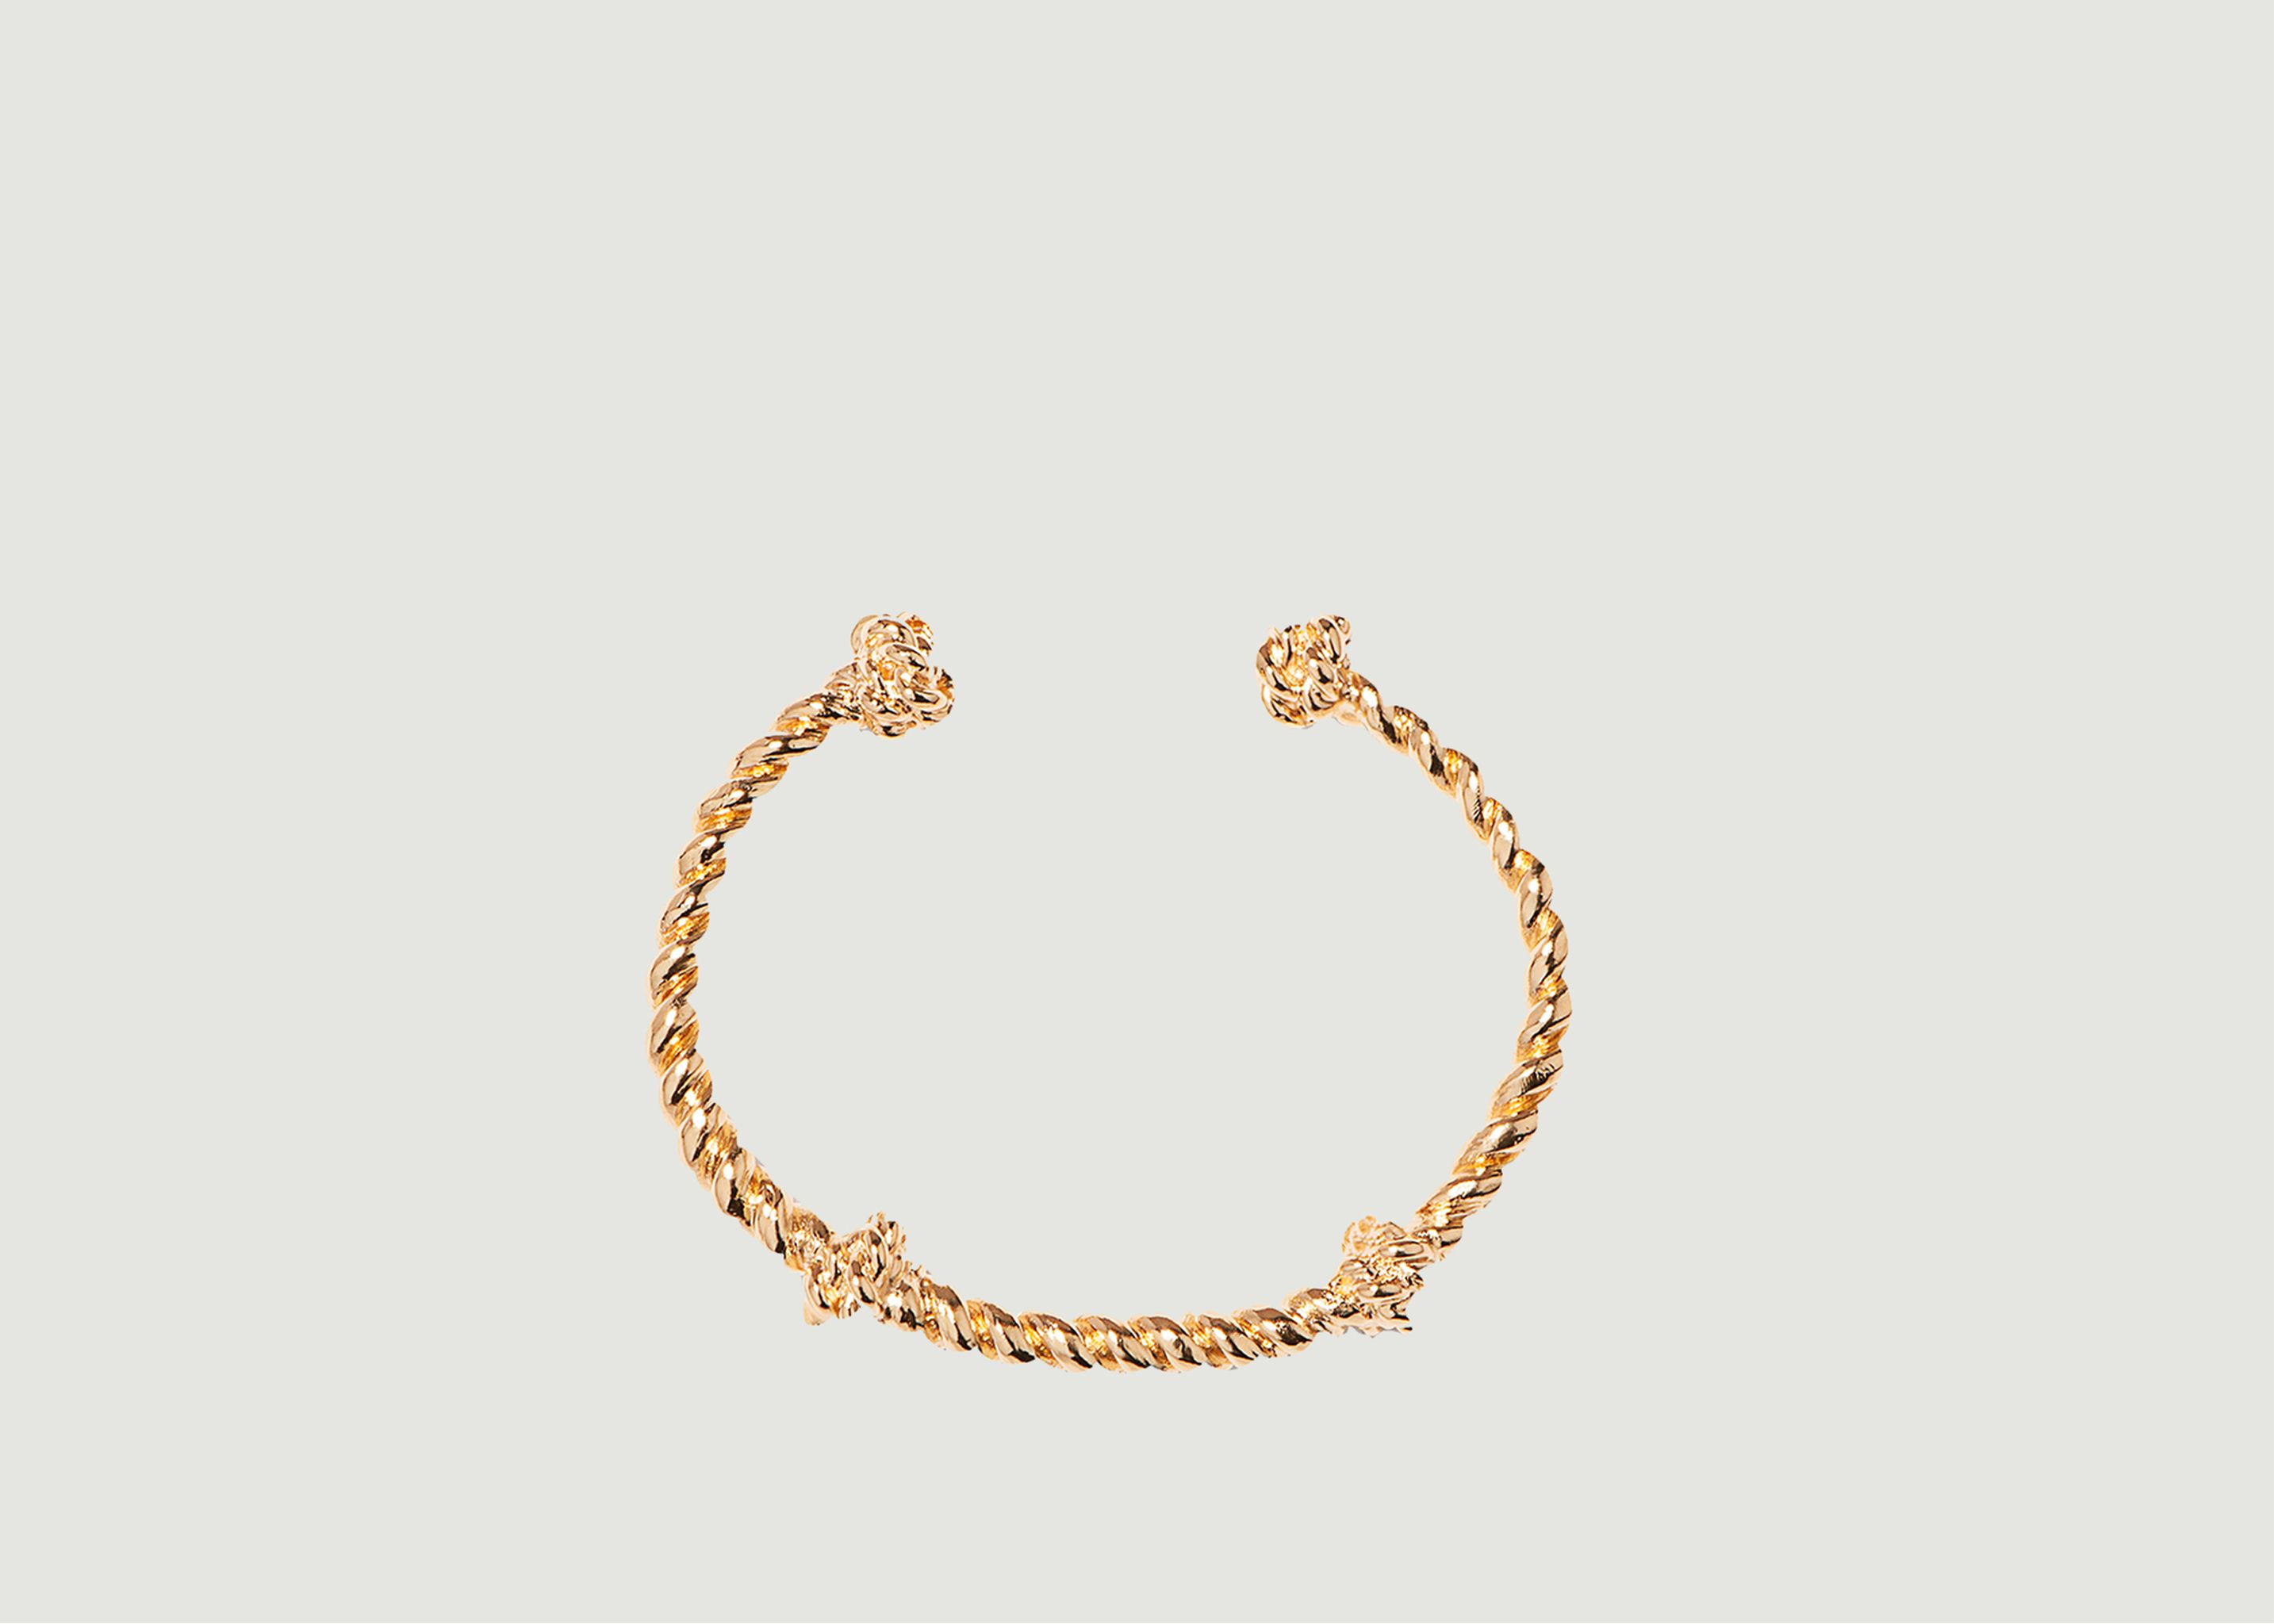 Palazzo gold plated bangle bracelet - Aurélie Bidermann